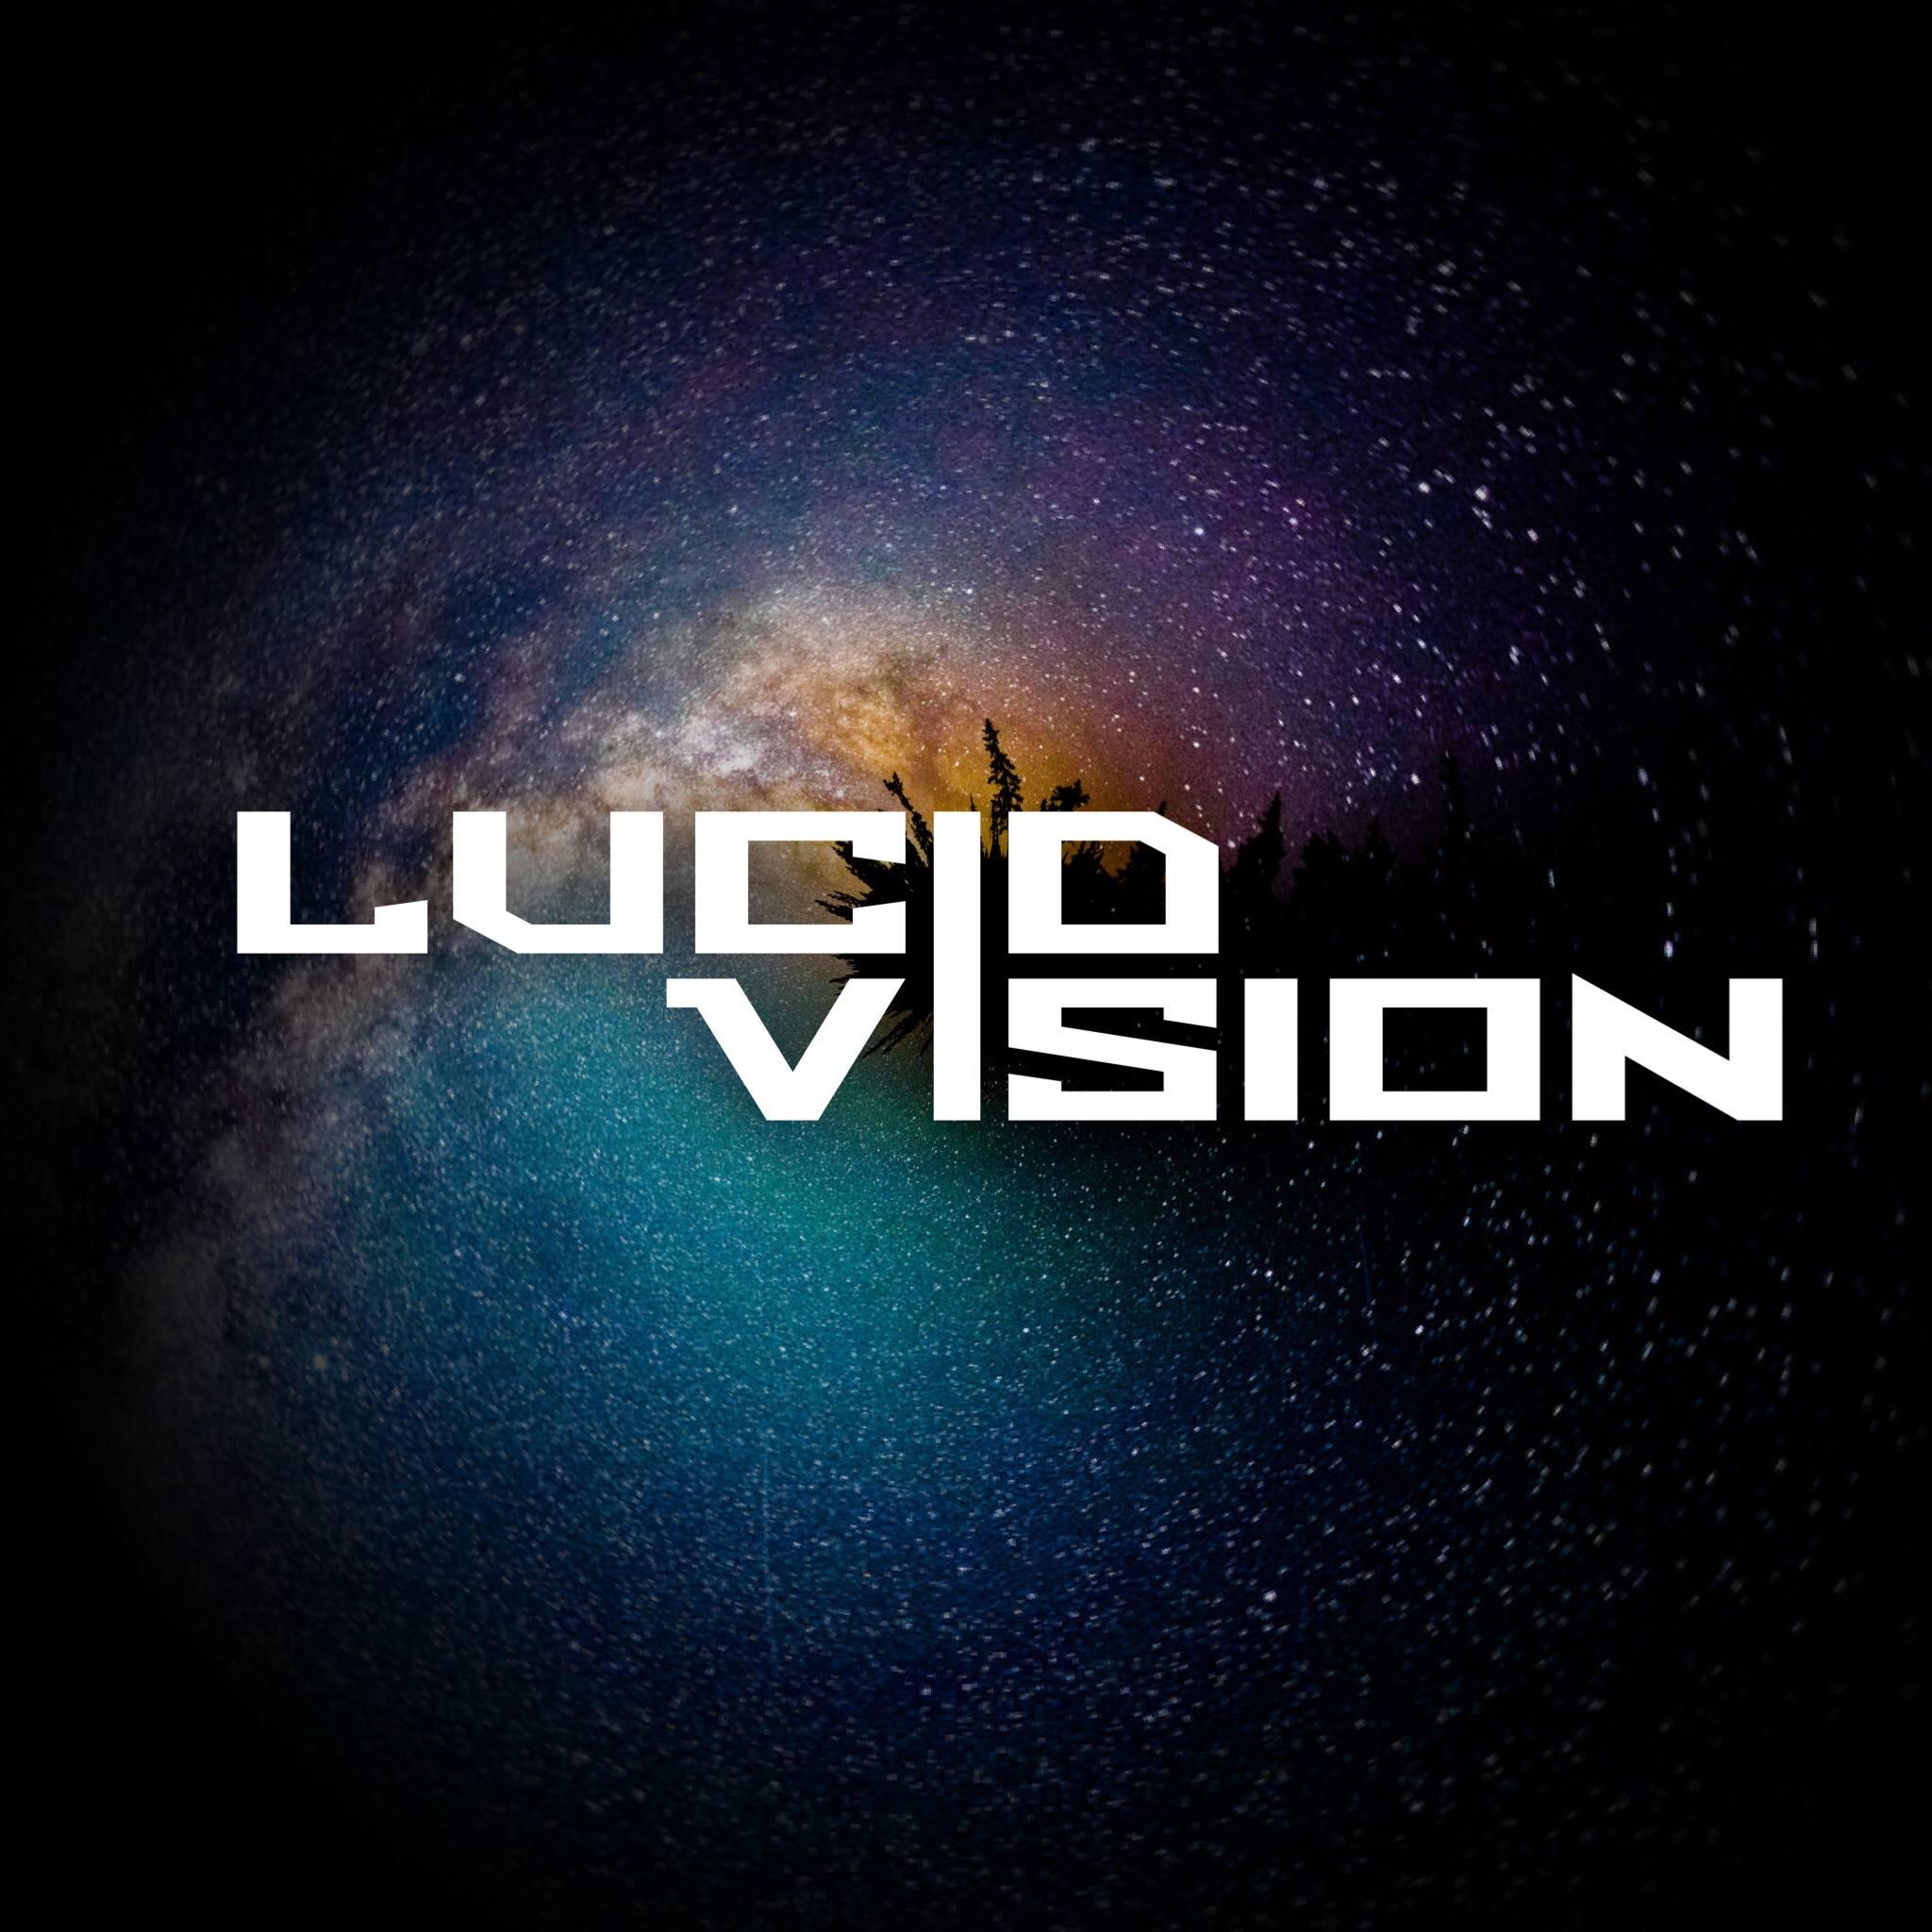 Lucid Vision at Nextdoor Honolulu